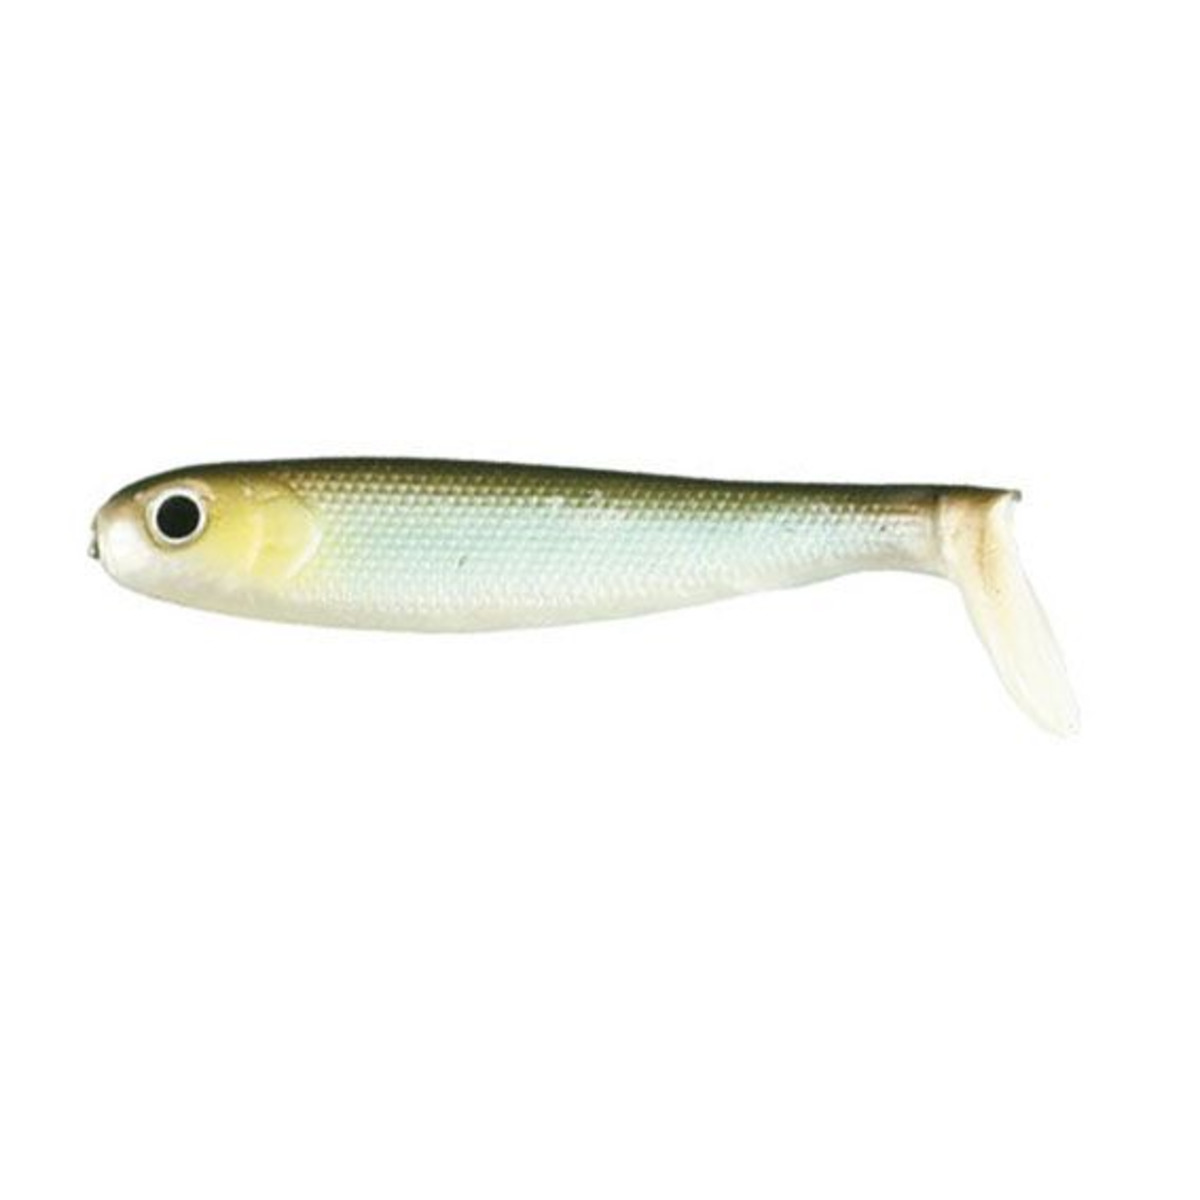 Nomura Live Fish - 8.5 cm - 8 g - Silver Black